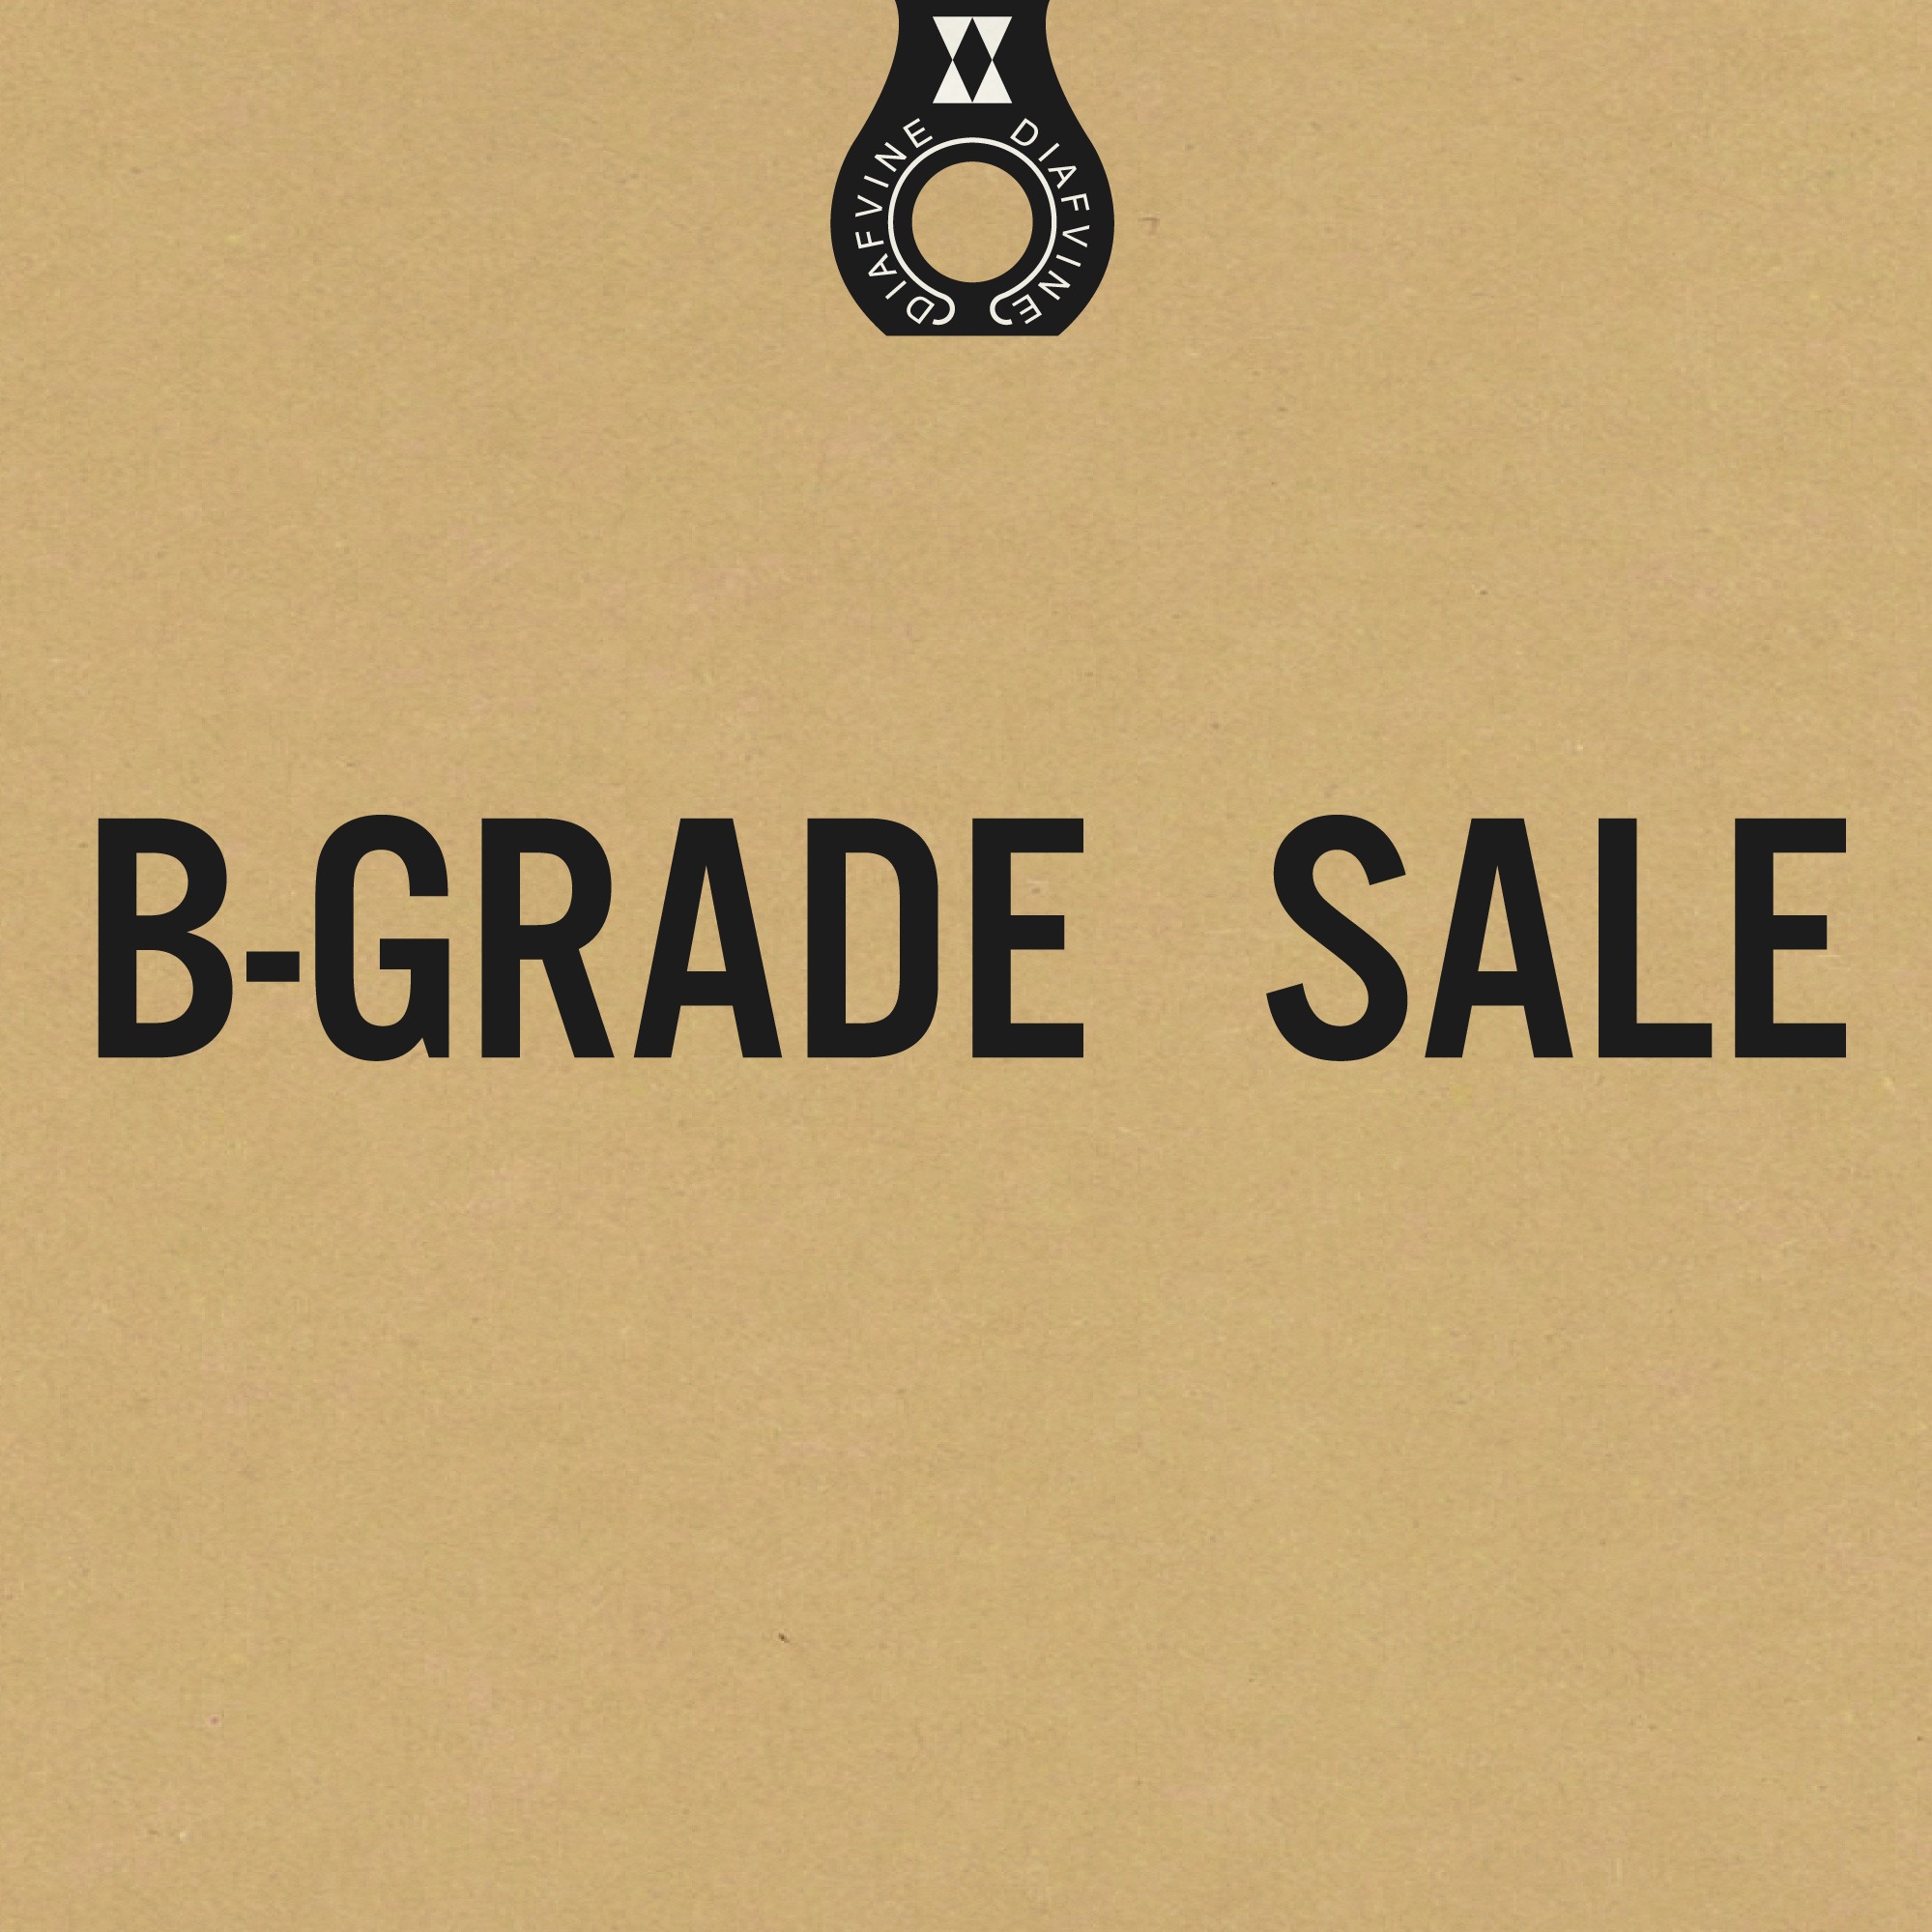 B-grade SALE 30%